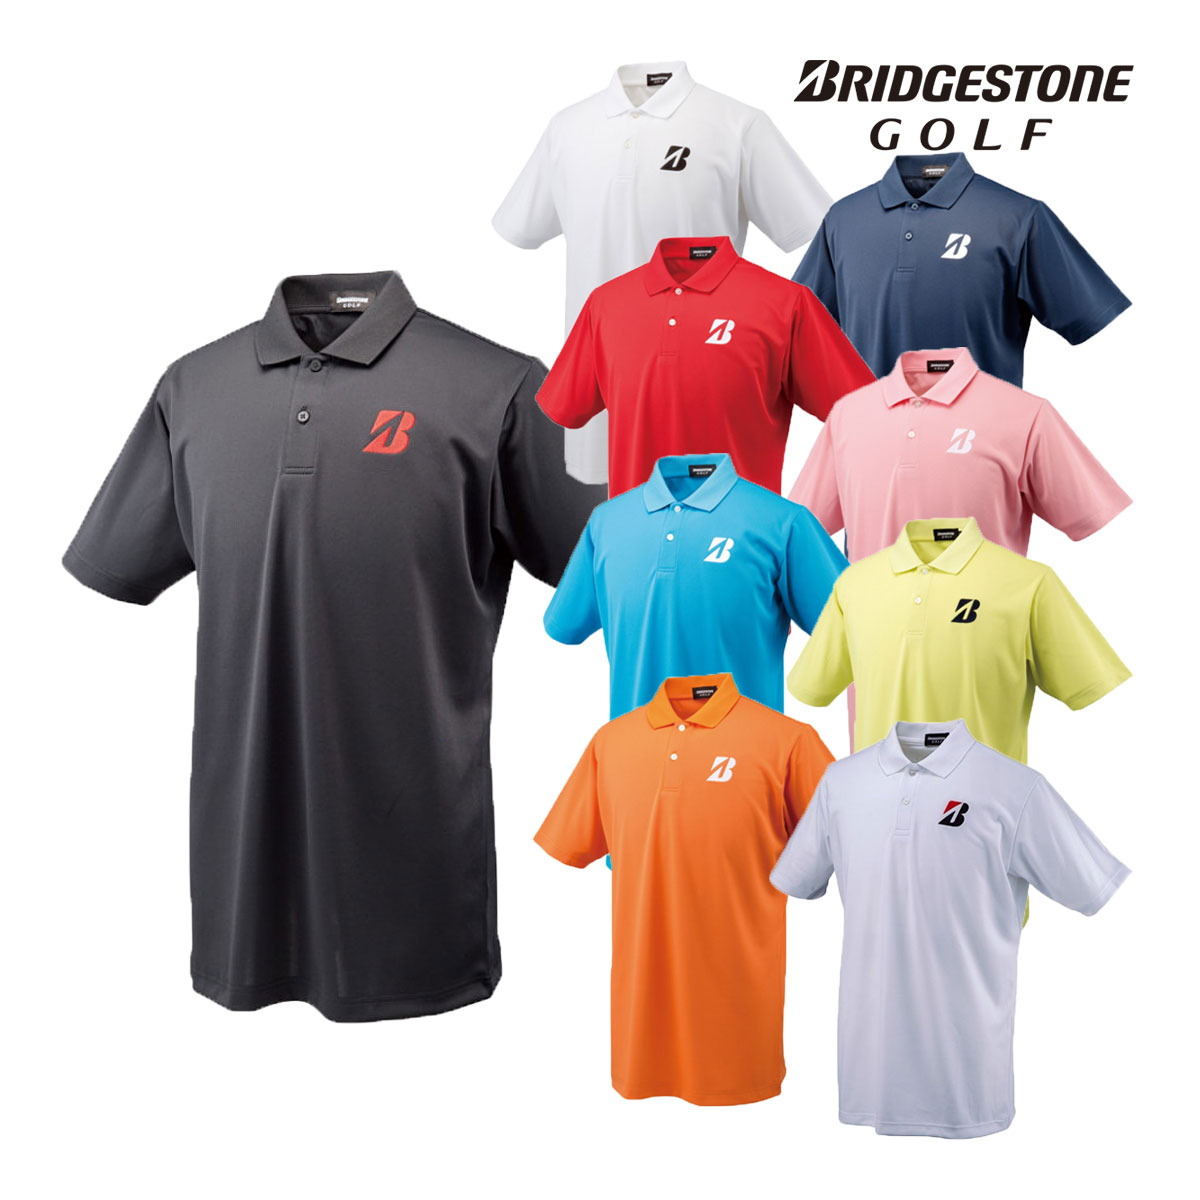 BridgestoneGolf ブリヂストンゴルフ メンズ半袖ポロシャツ 50G01A 